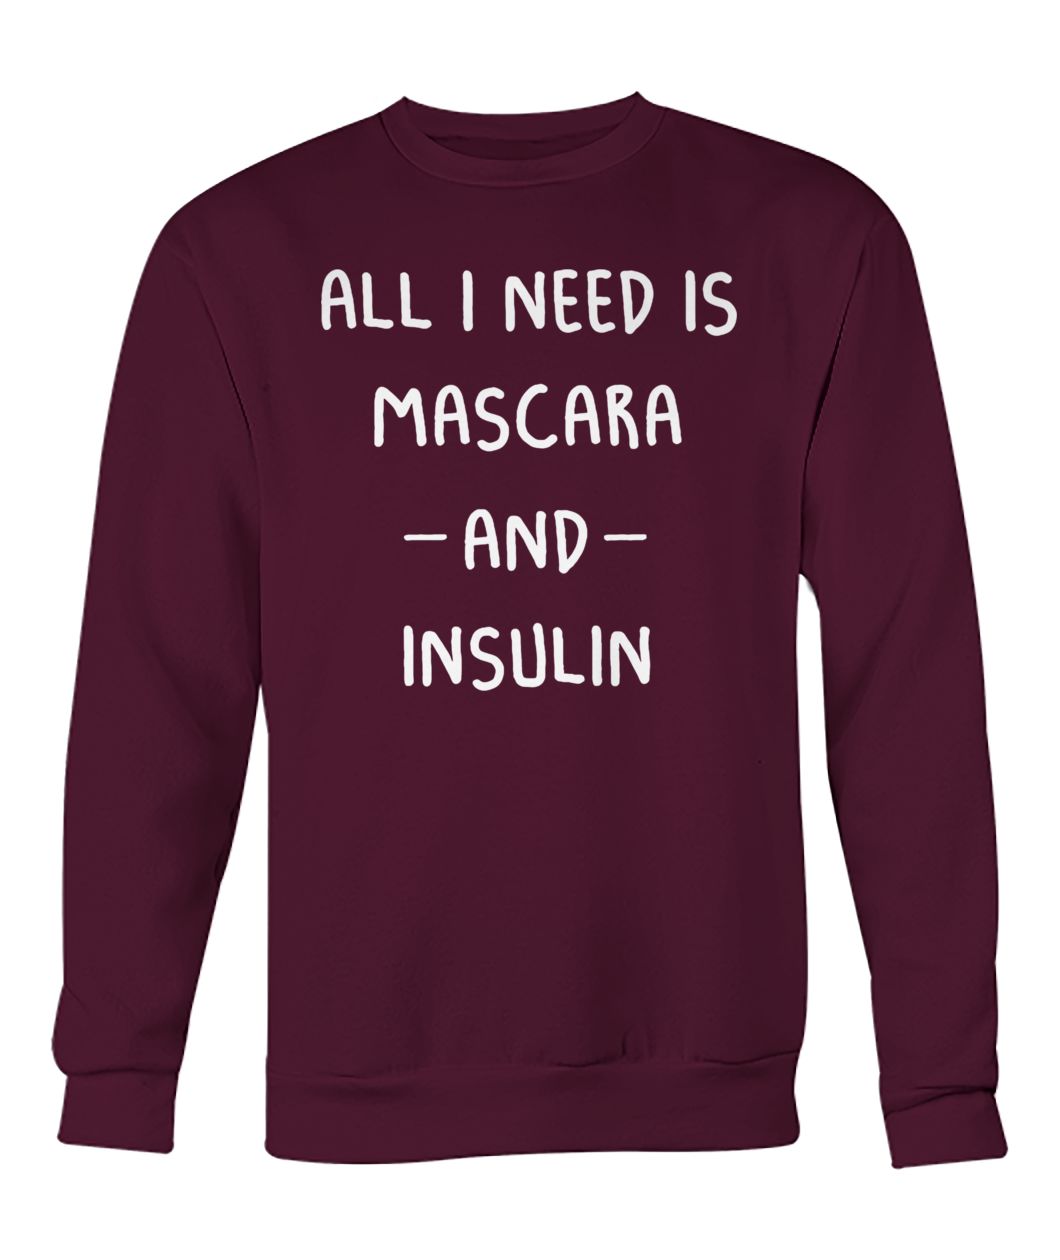 All I need is mascara and insulin crew neck sweatshirt